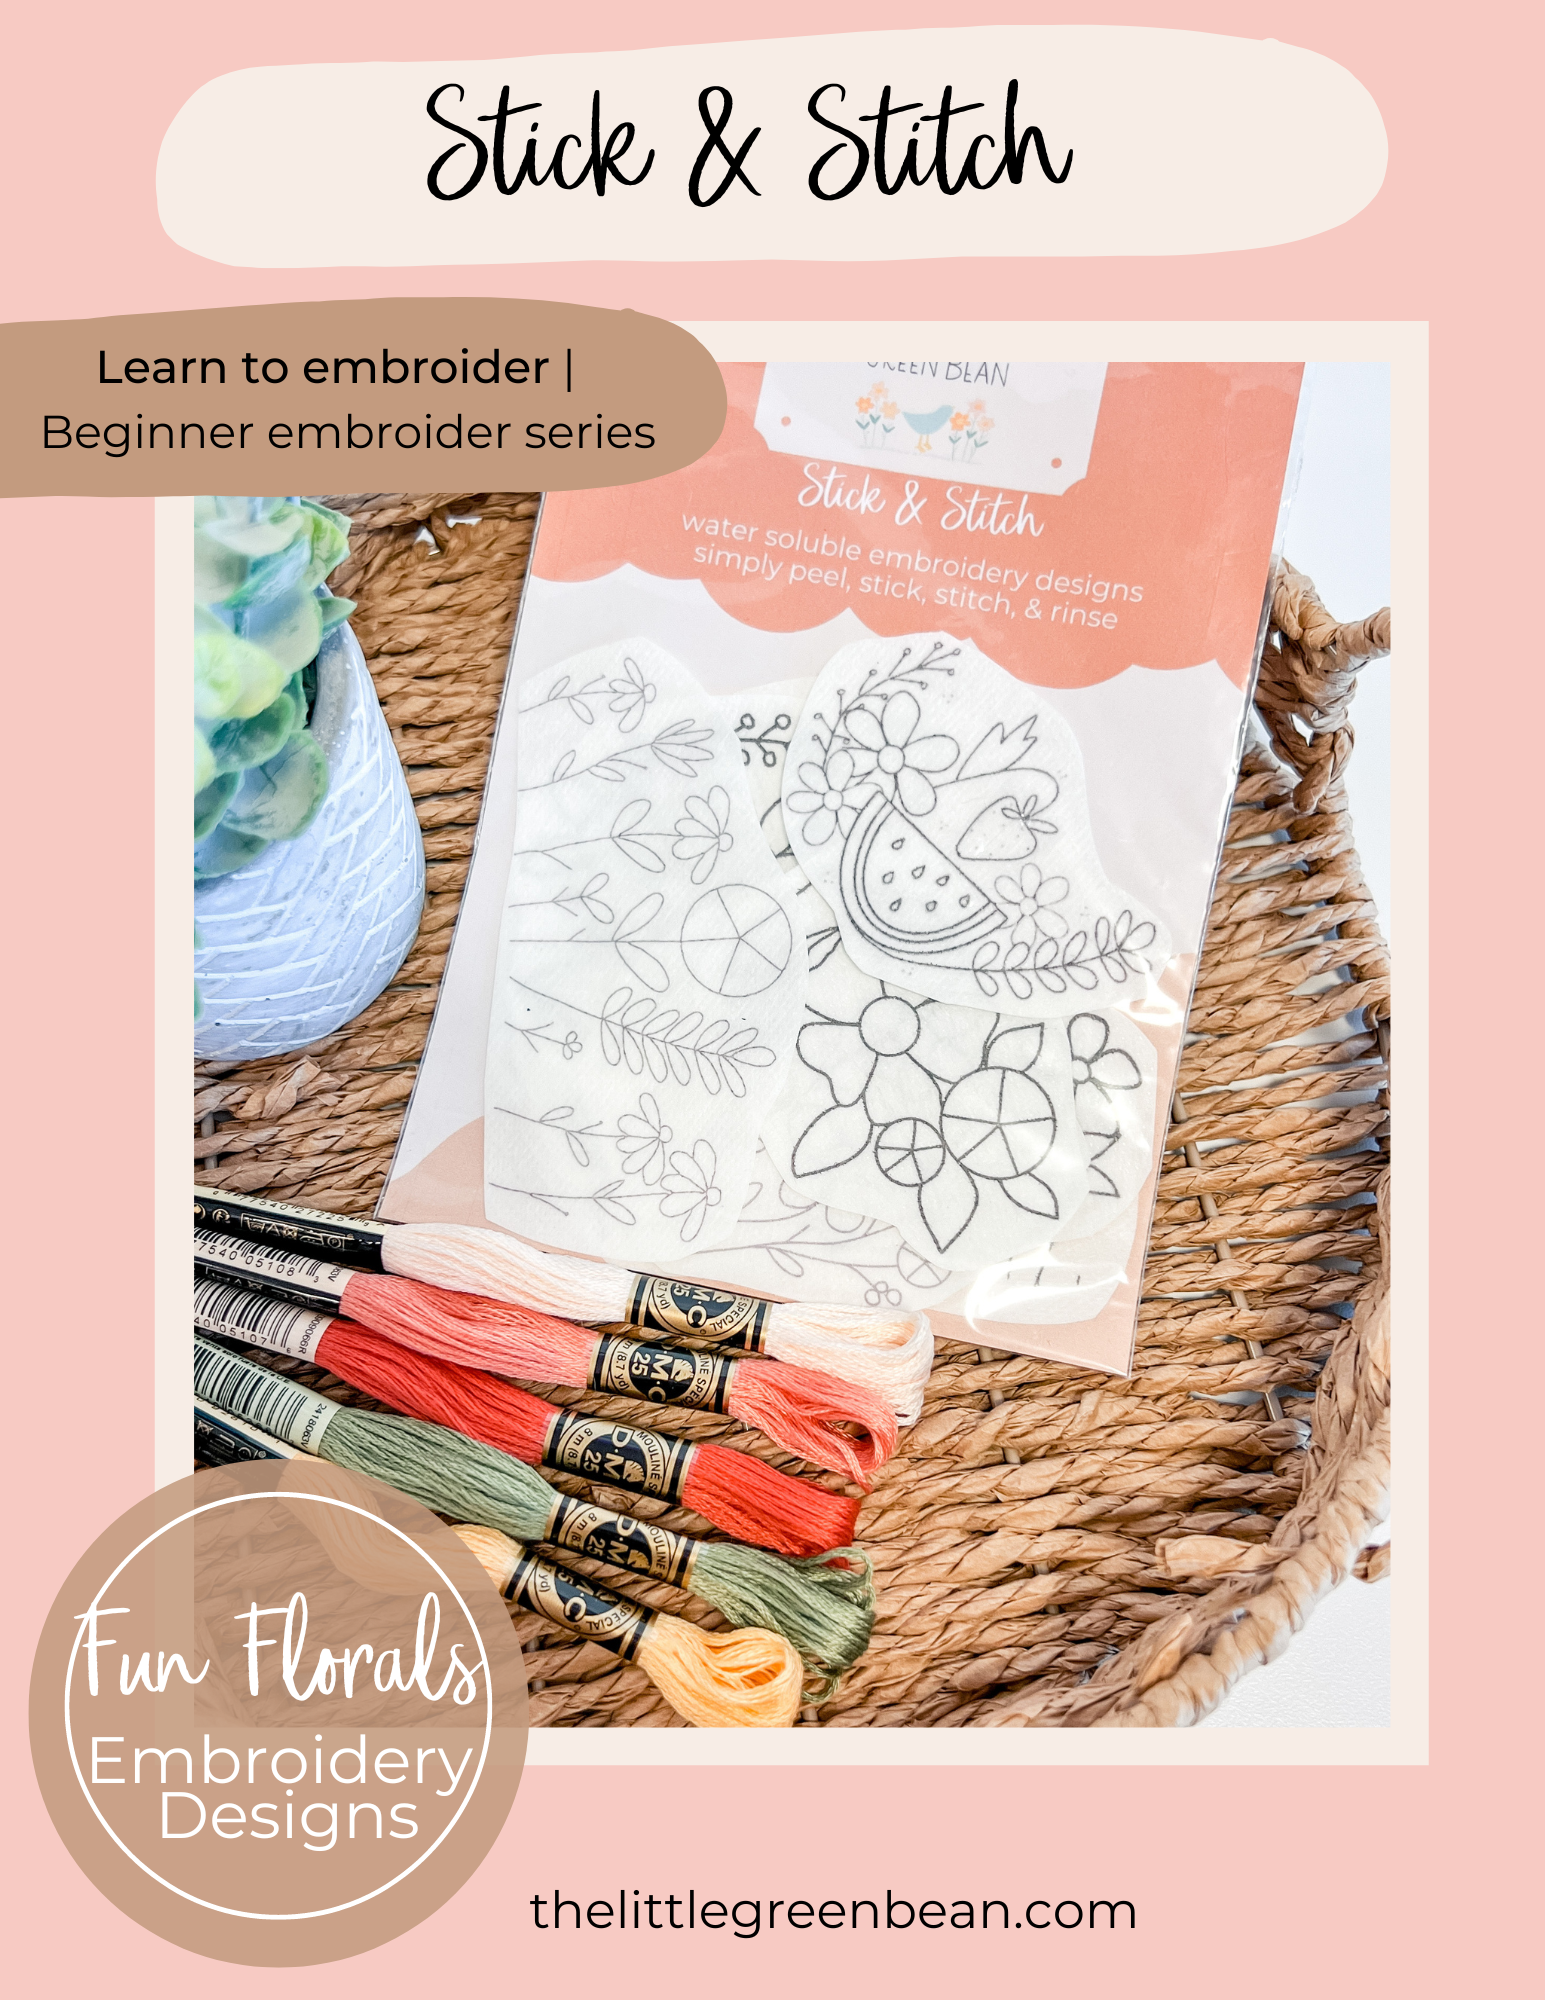 4 Set of Full Range Embroidery Kits for Beginners Stamped Embroidery kit  That Includes Embroidery Cloth (kit 2)